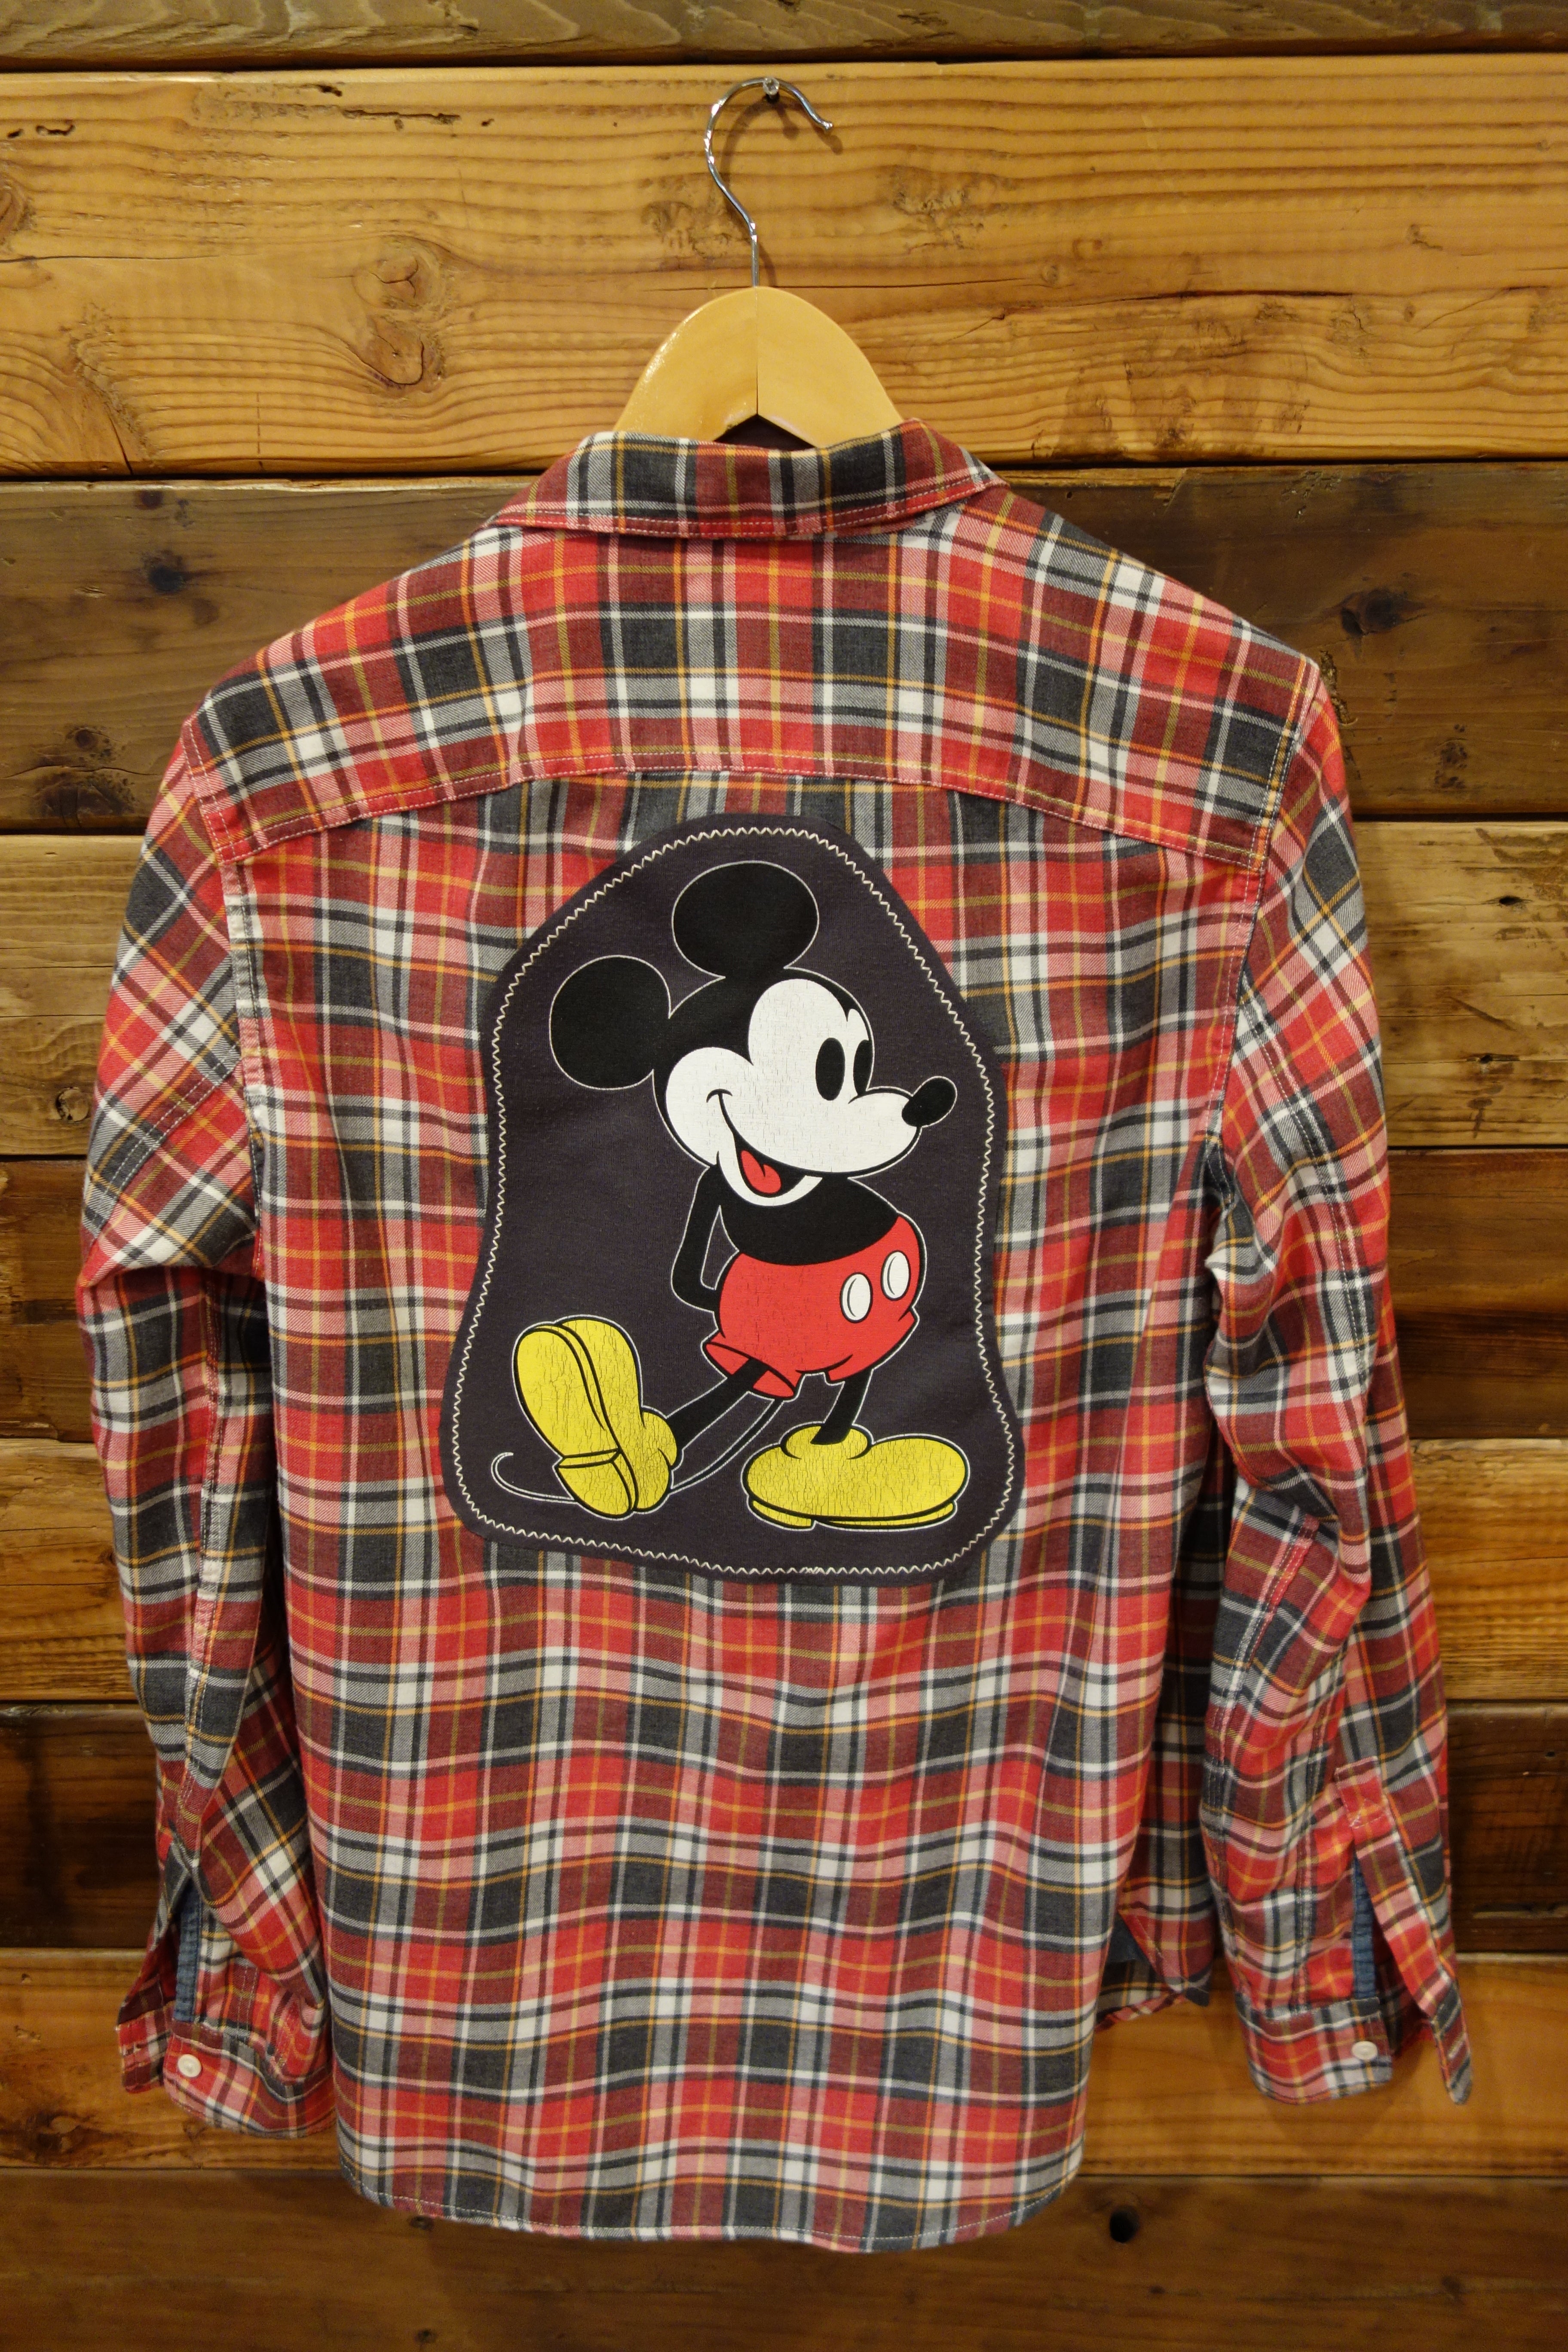 Gap vintage plaid shirt, Mickey Mouse tee, Disney